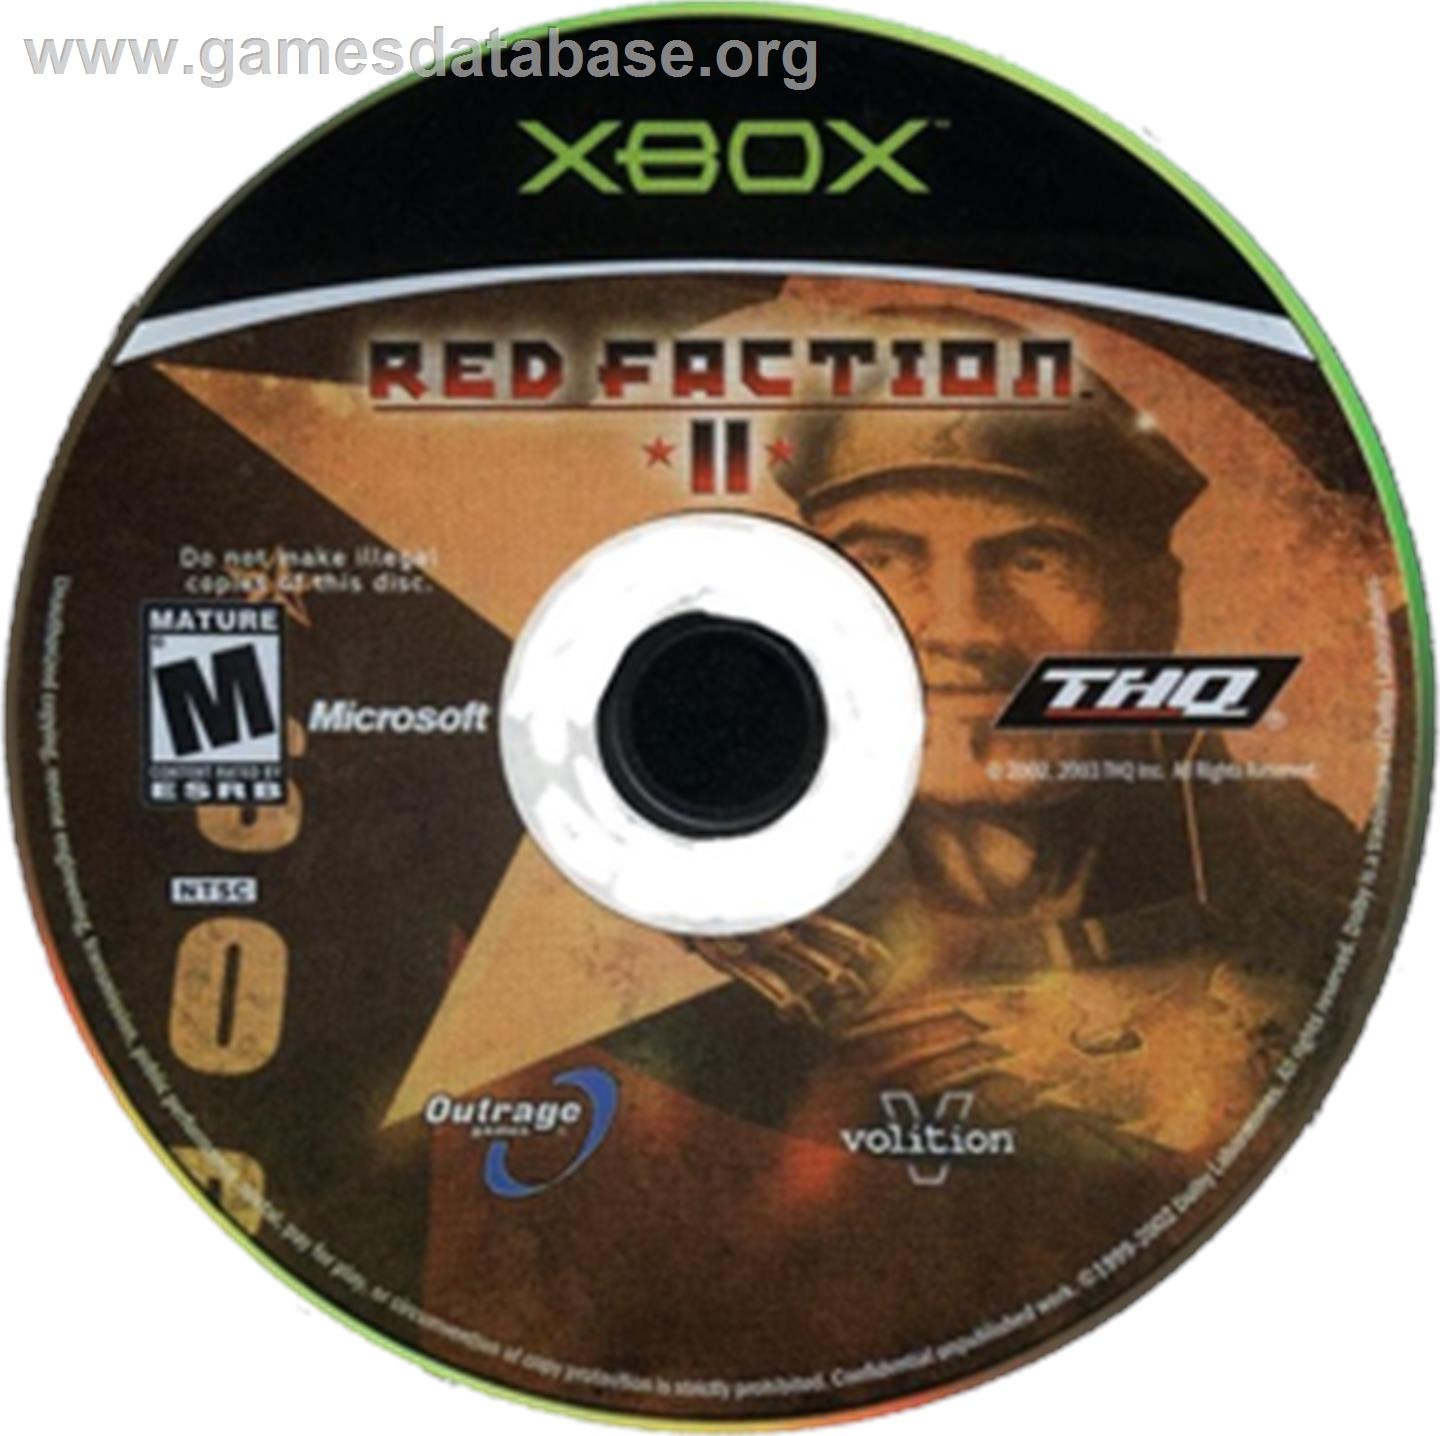 Red Faction 2 - Microsoft Xbox - Artwork - CD